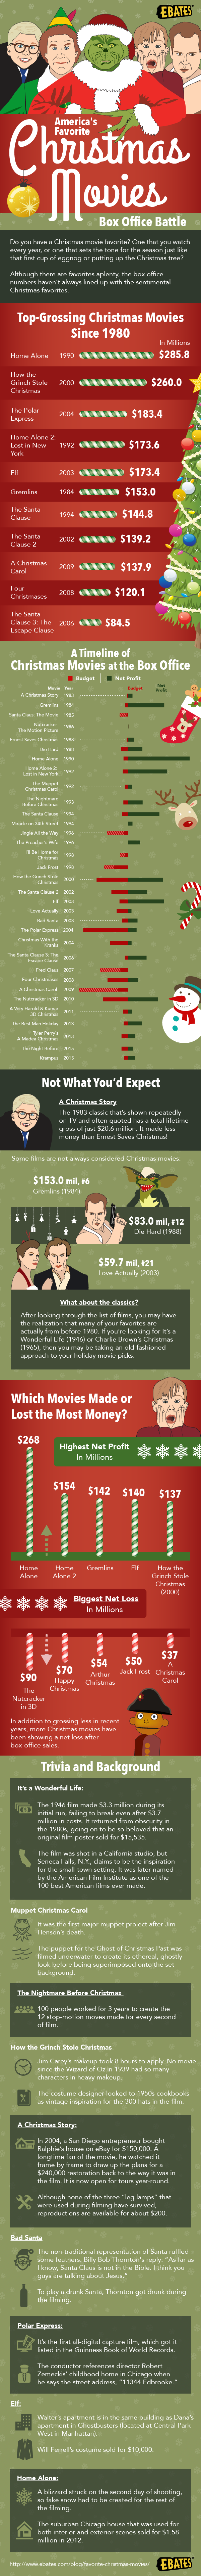 Favorite Christmas Movies Infographic